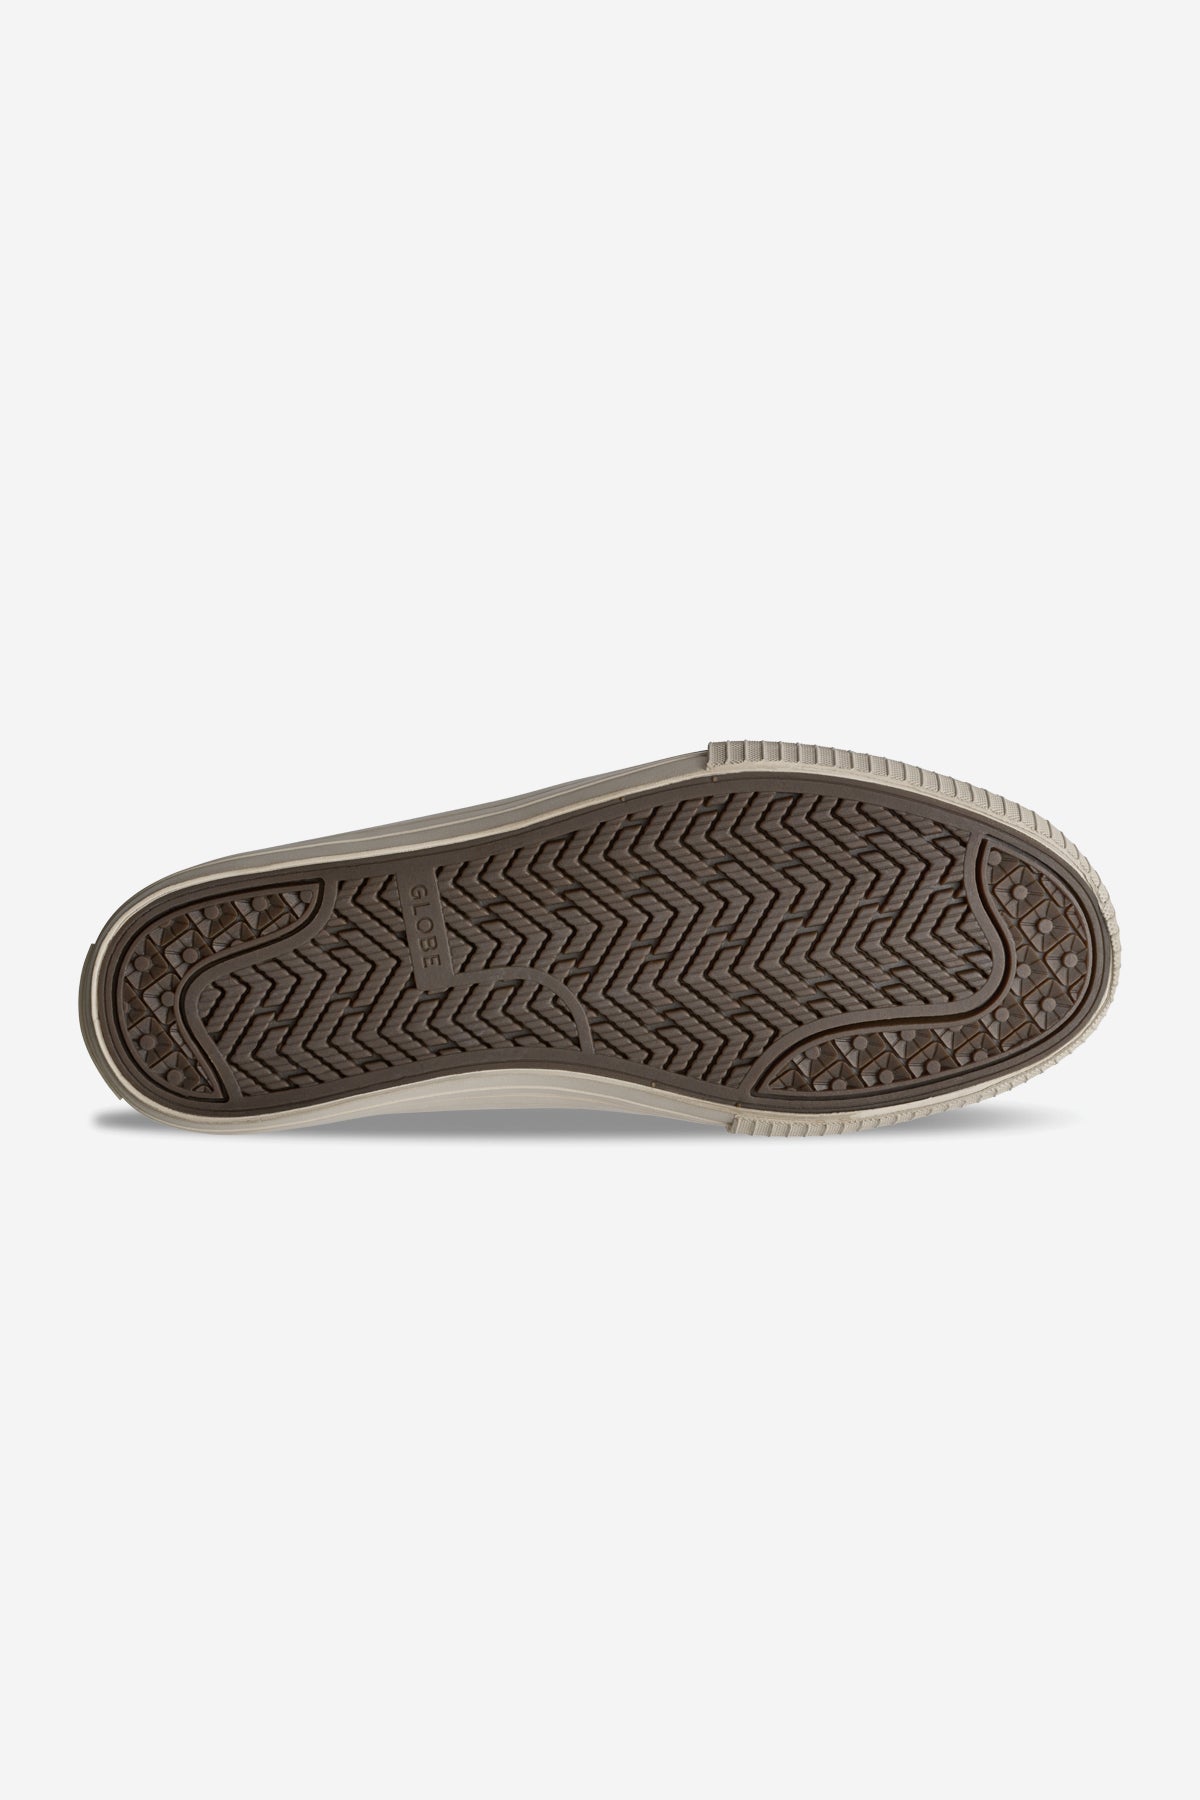 Globe - Gillette - Schwarz/Cream - skateboard Schuhe